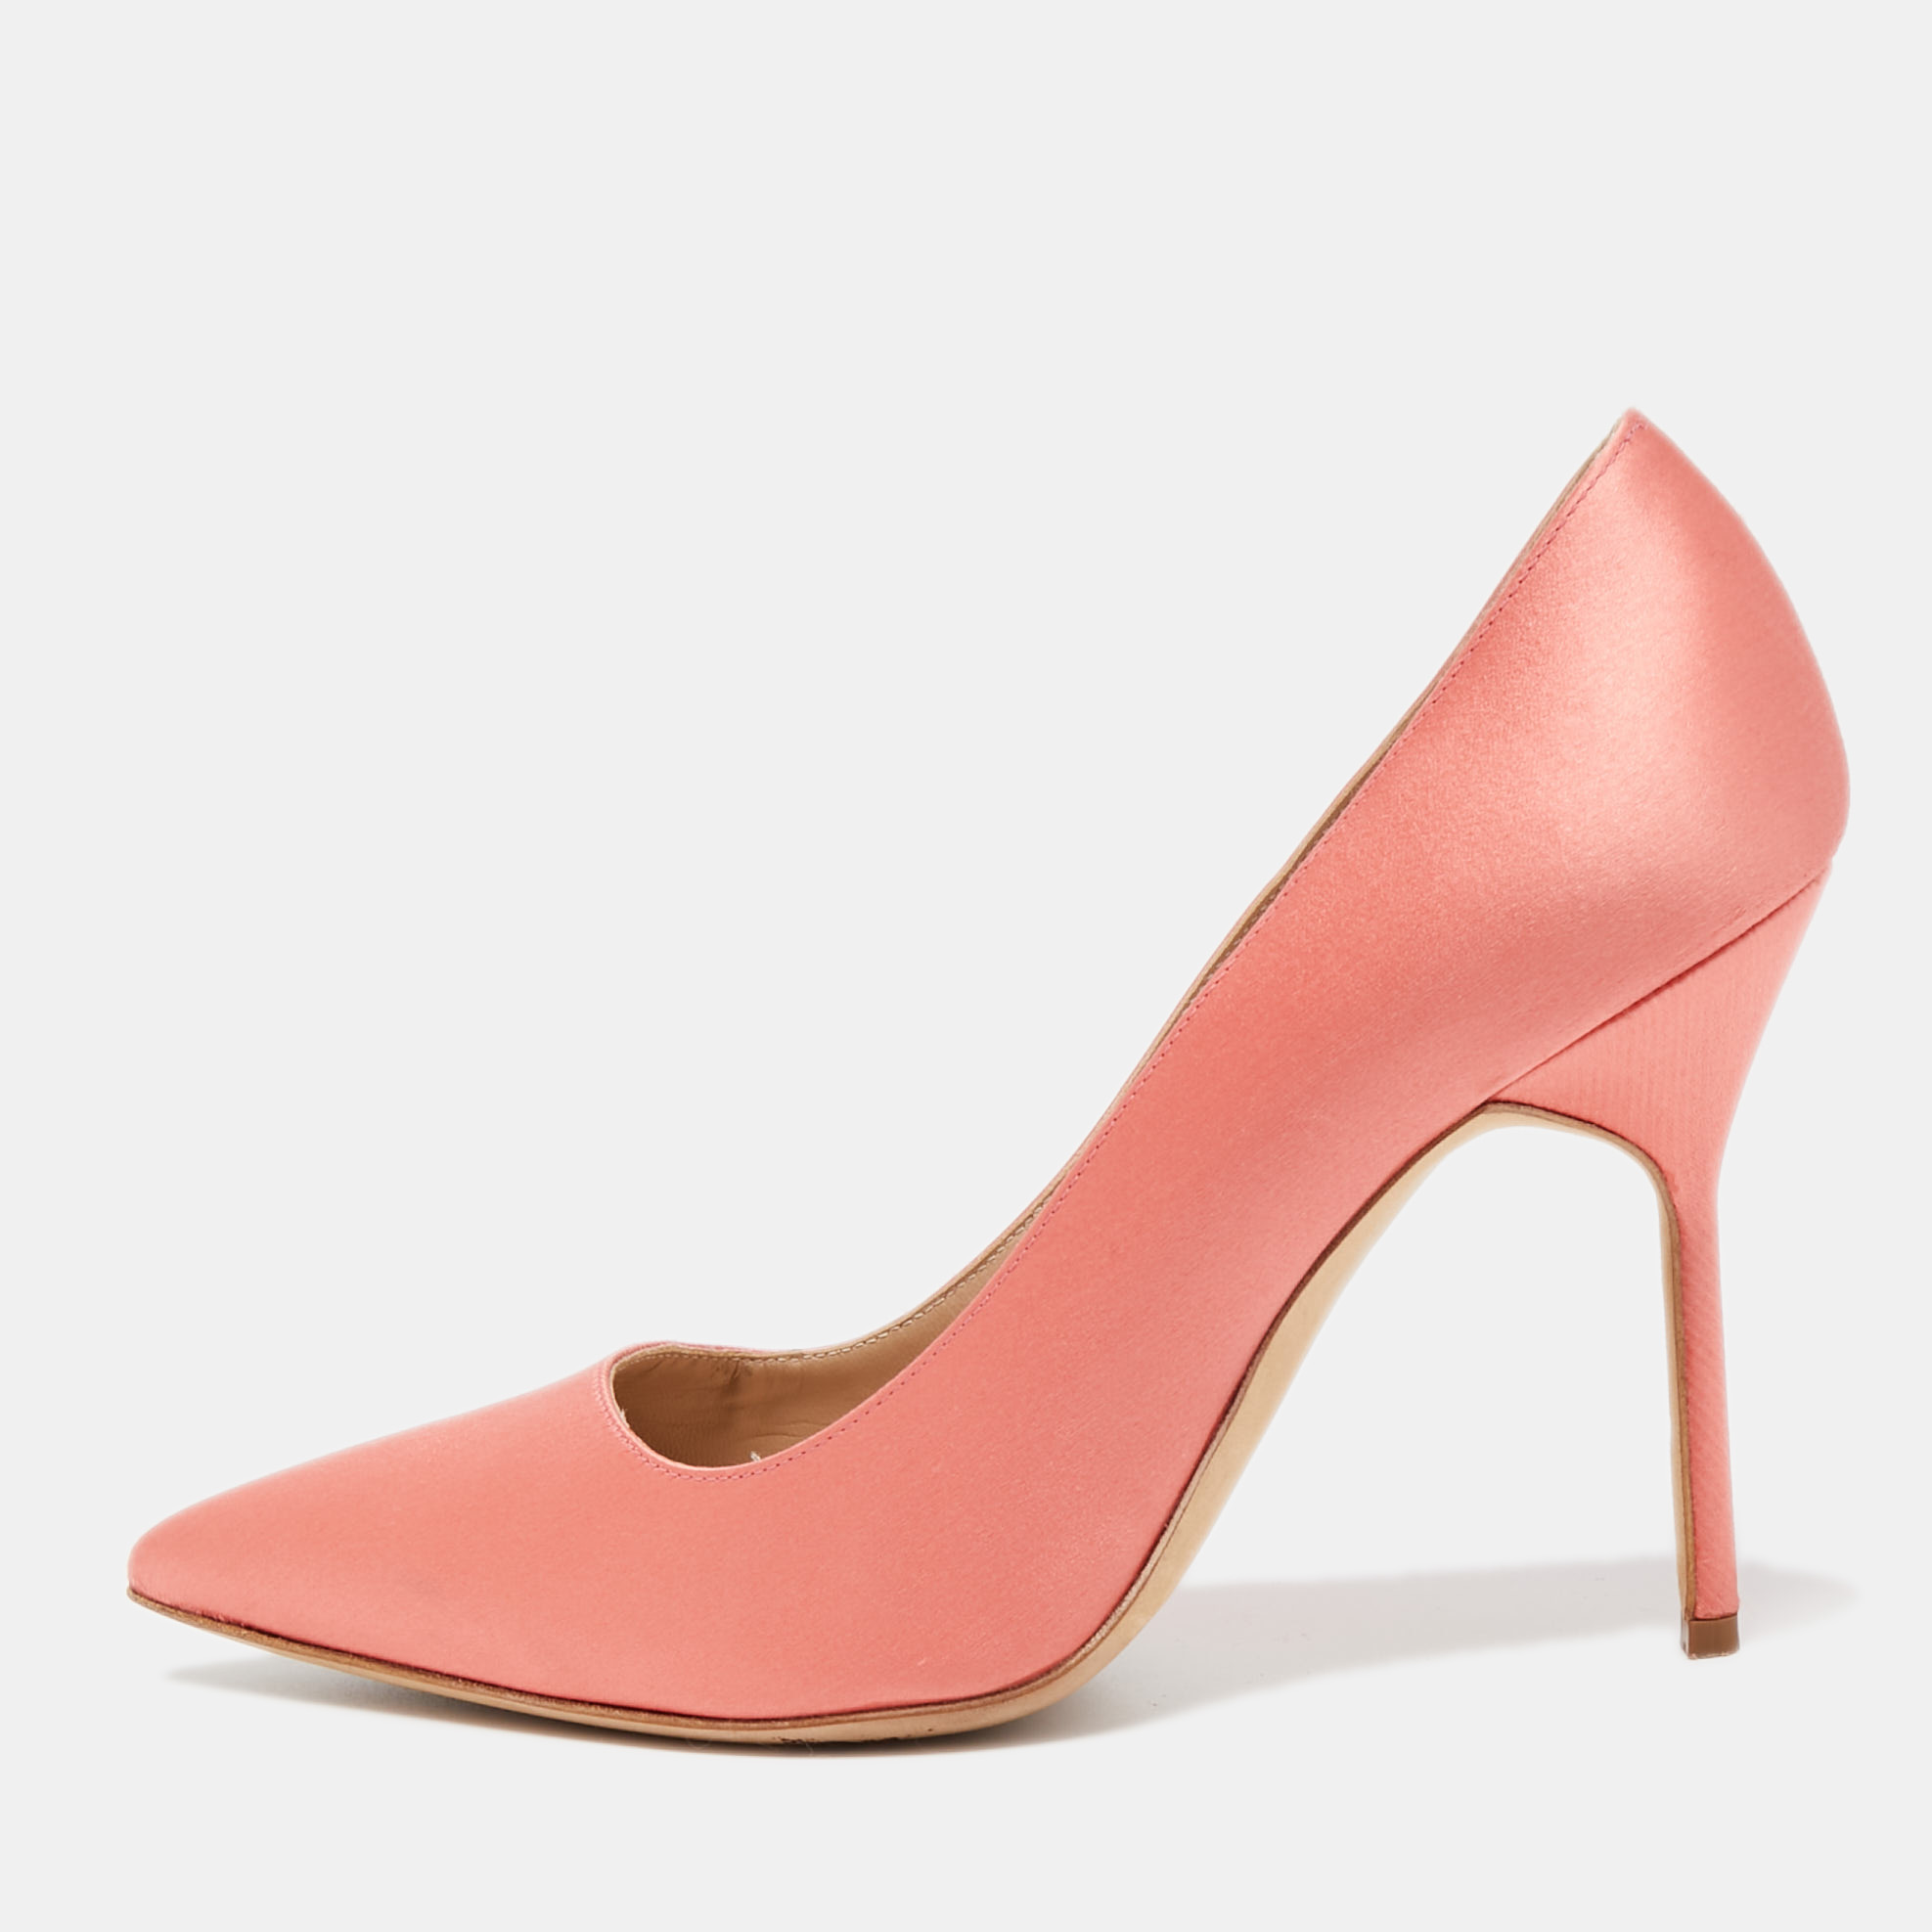 Manolo Blahnik Pink Satin Pointed Toe Pumps Size 37.5